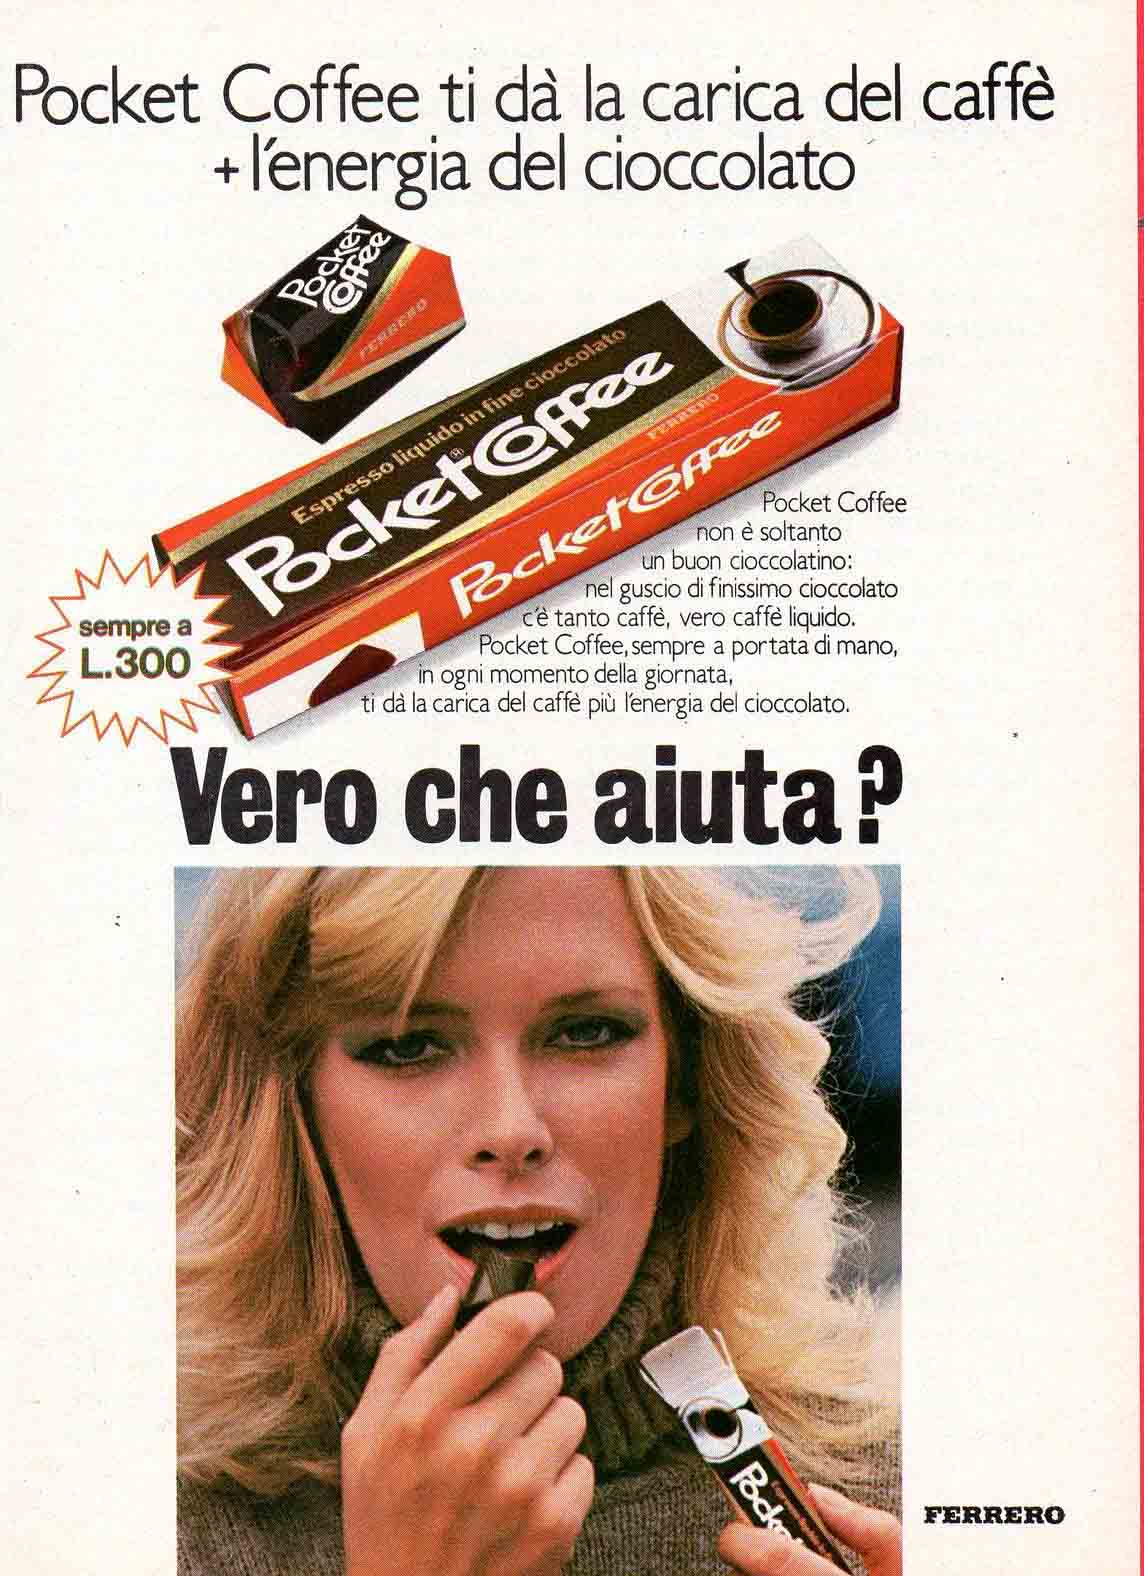 pocket coffee vintage advertisement